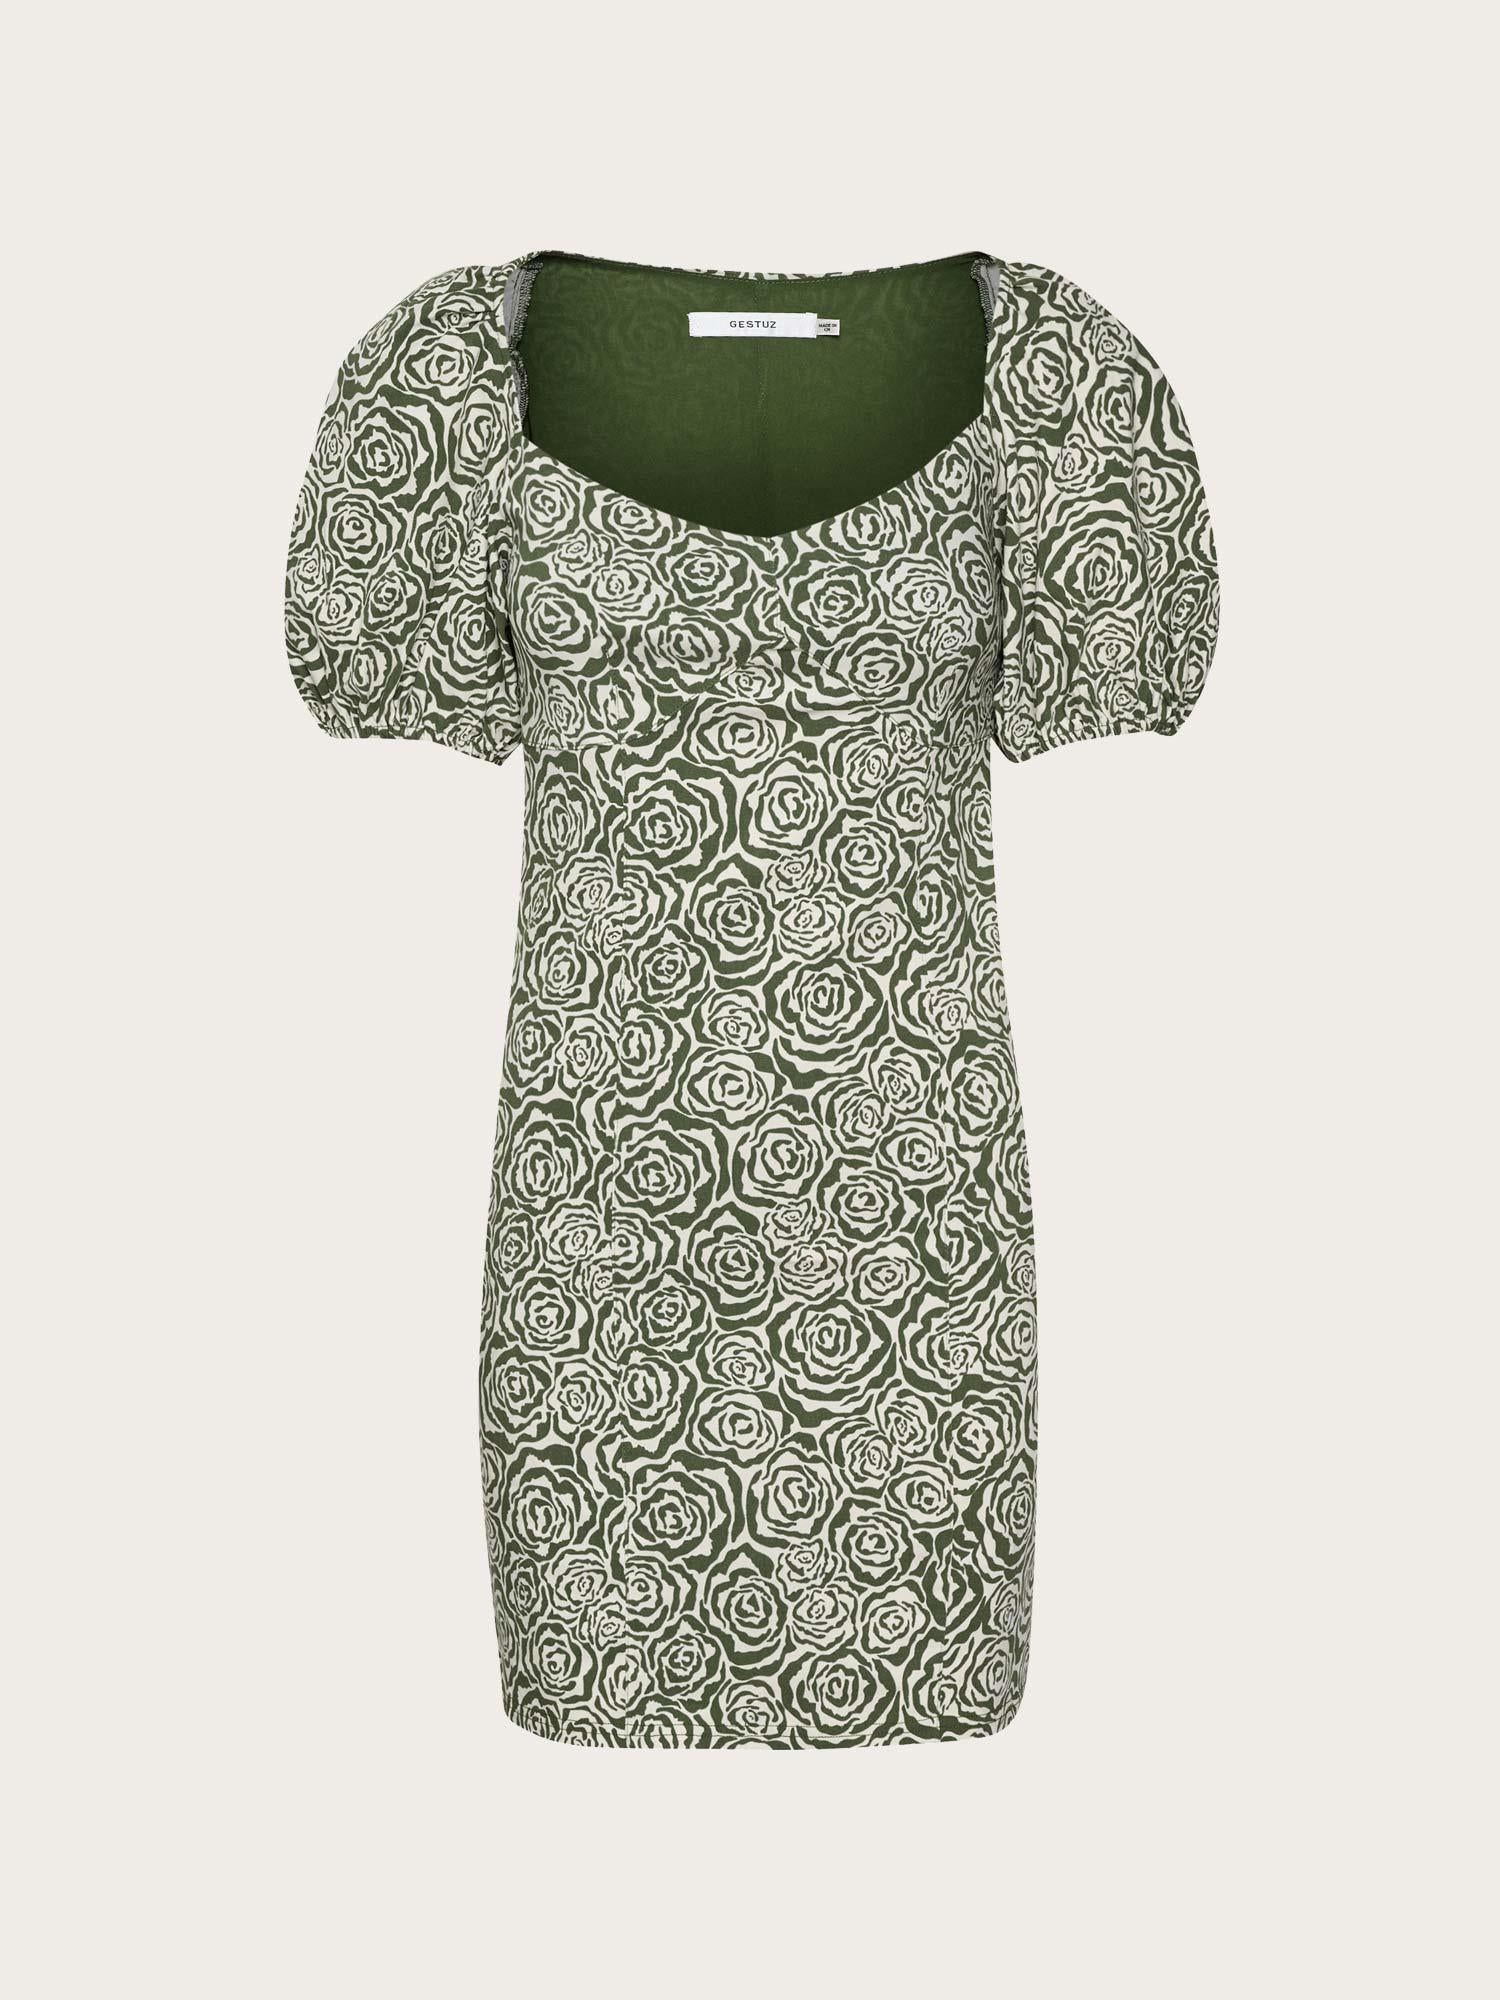 Rosille Short Dress - Chive Green Rose